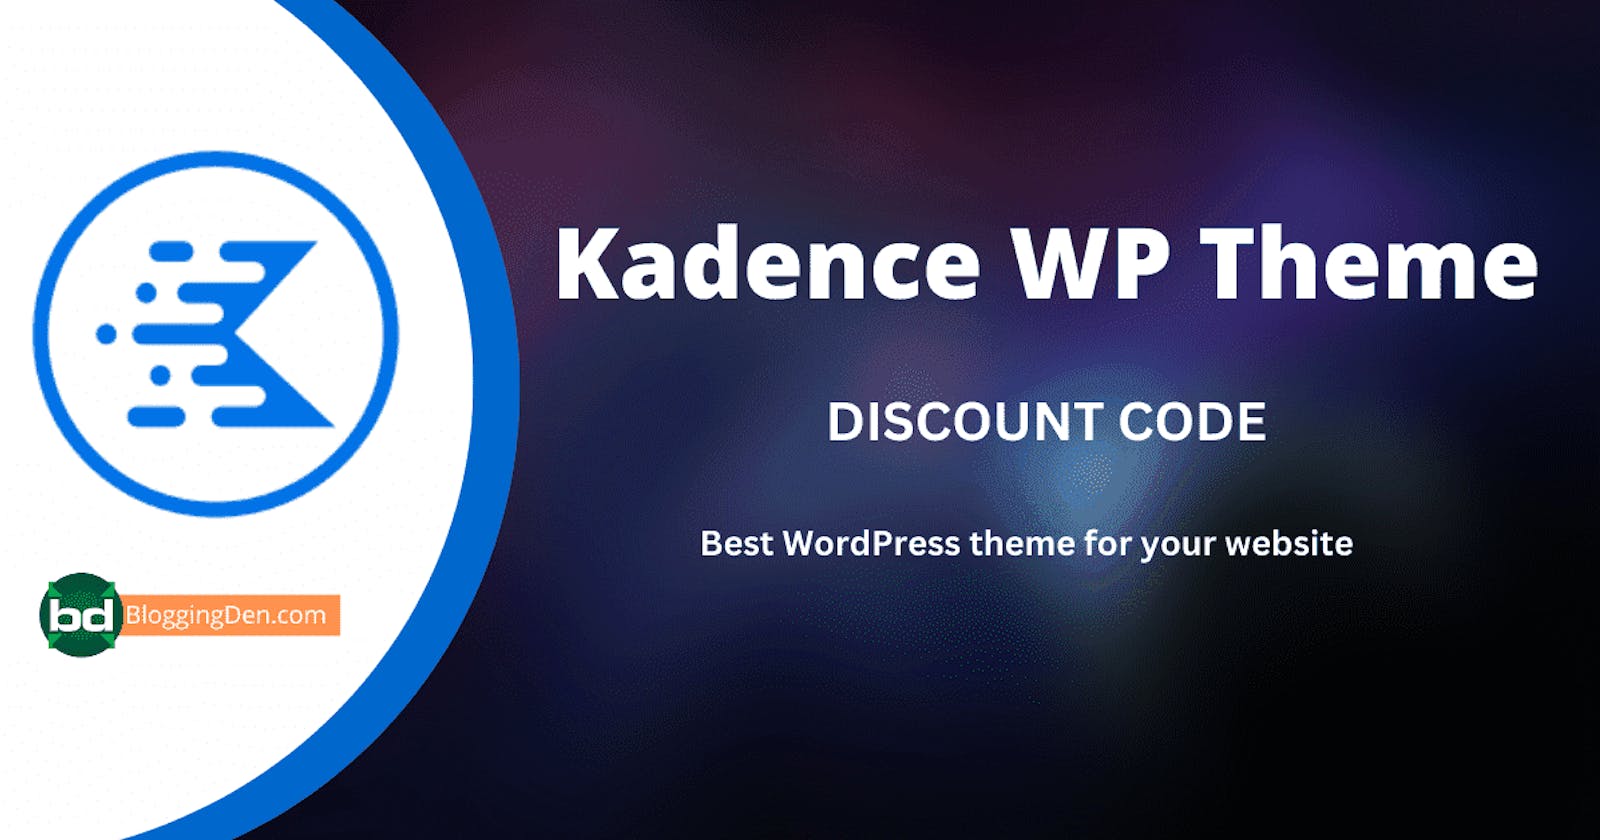 Kadence WP Discount Code: Your Key to Premium WordPress Experience